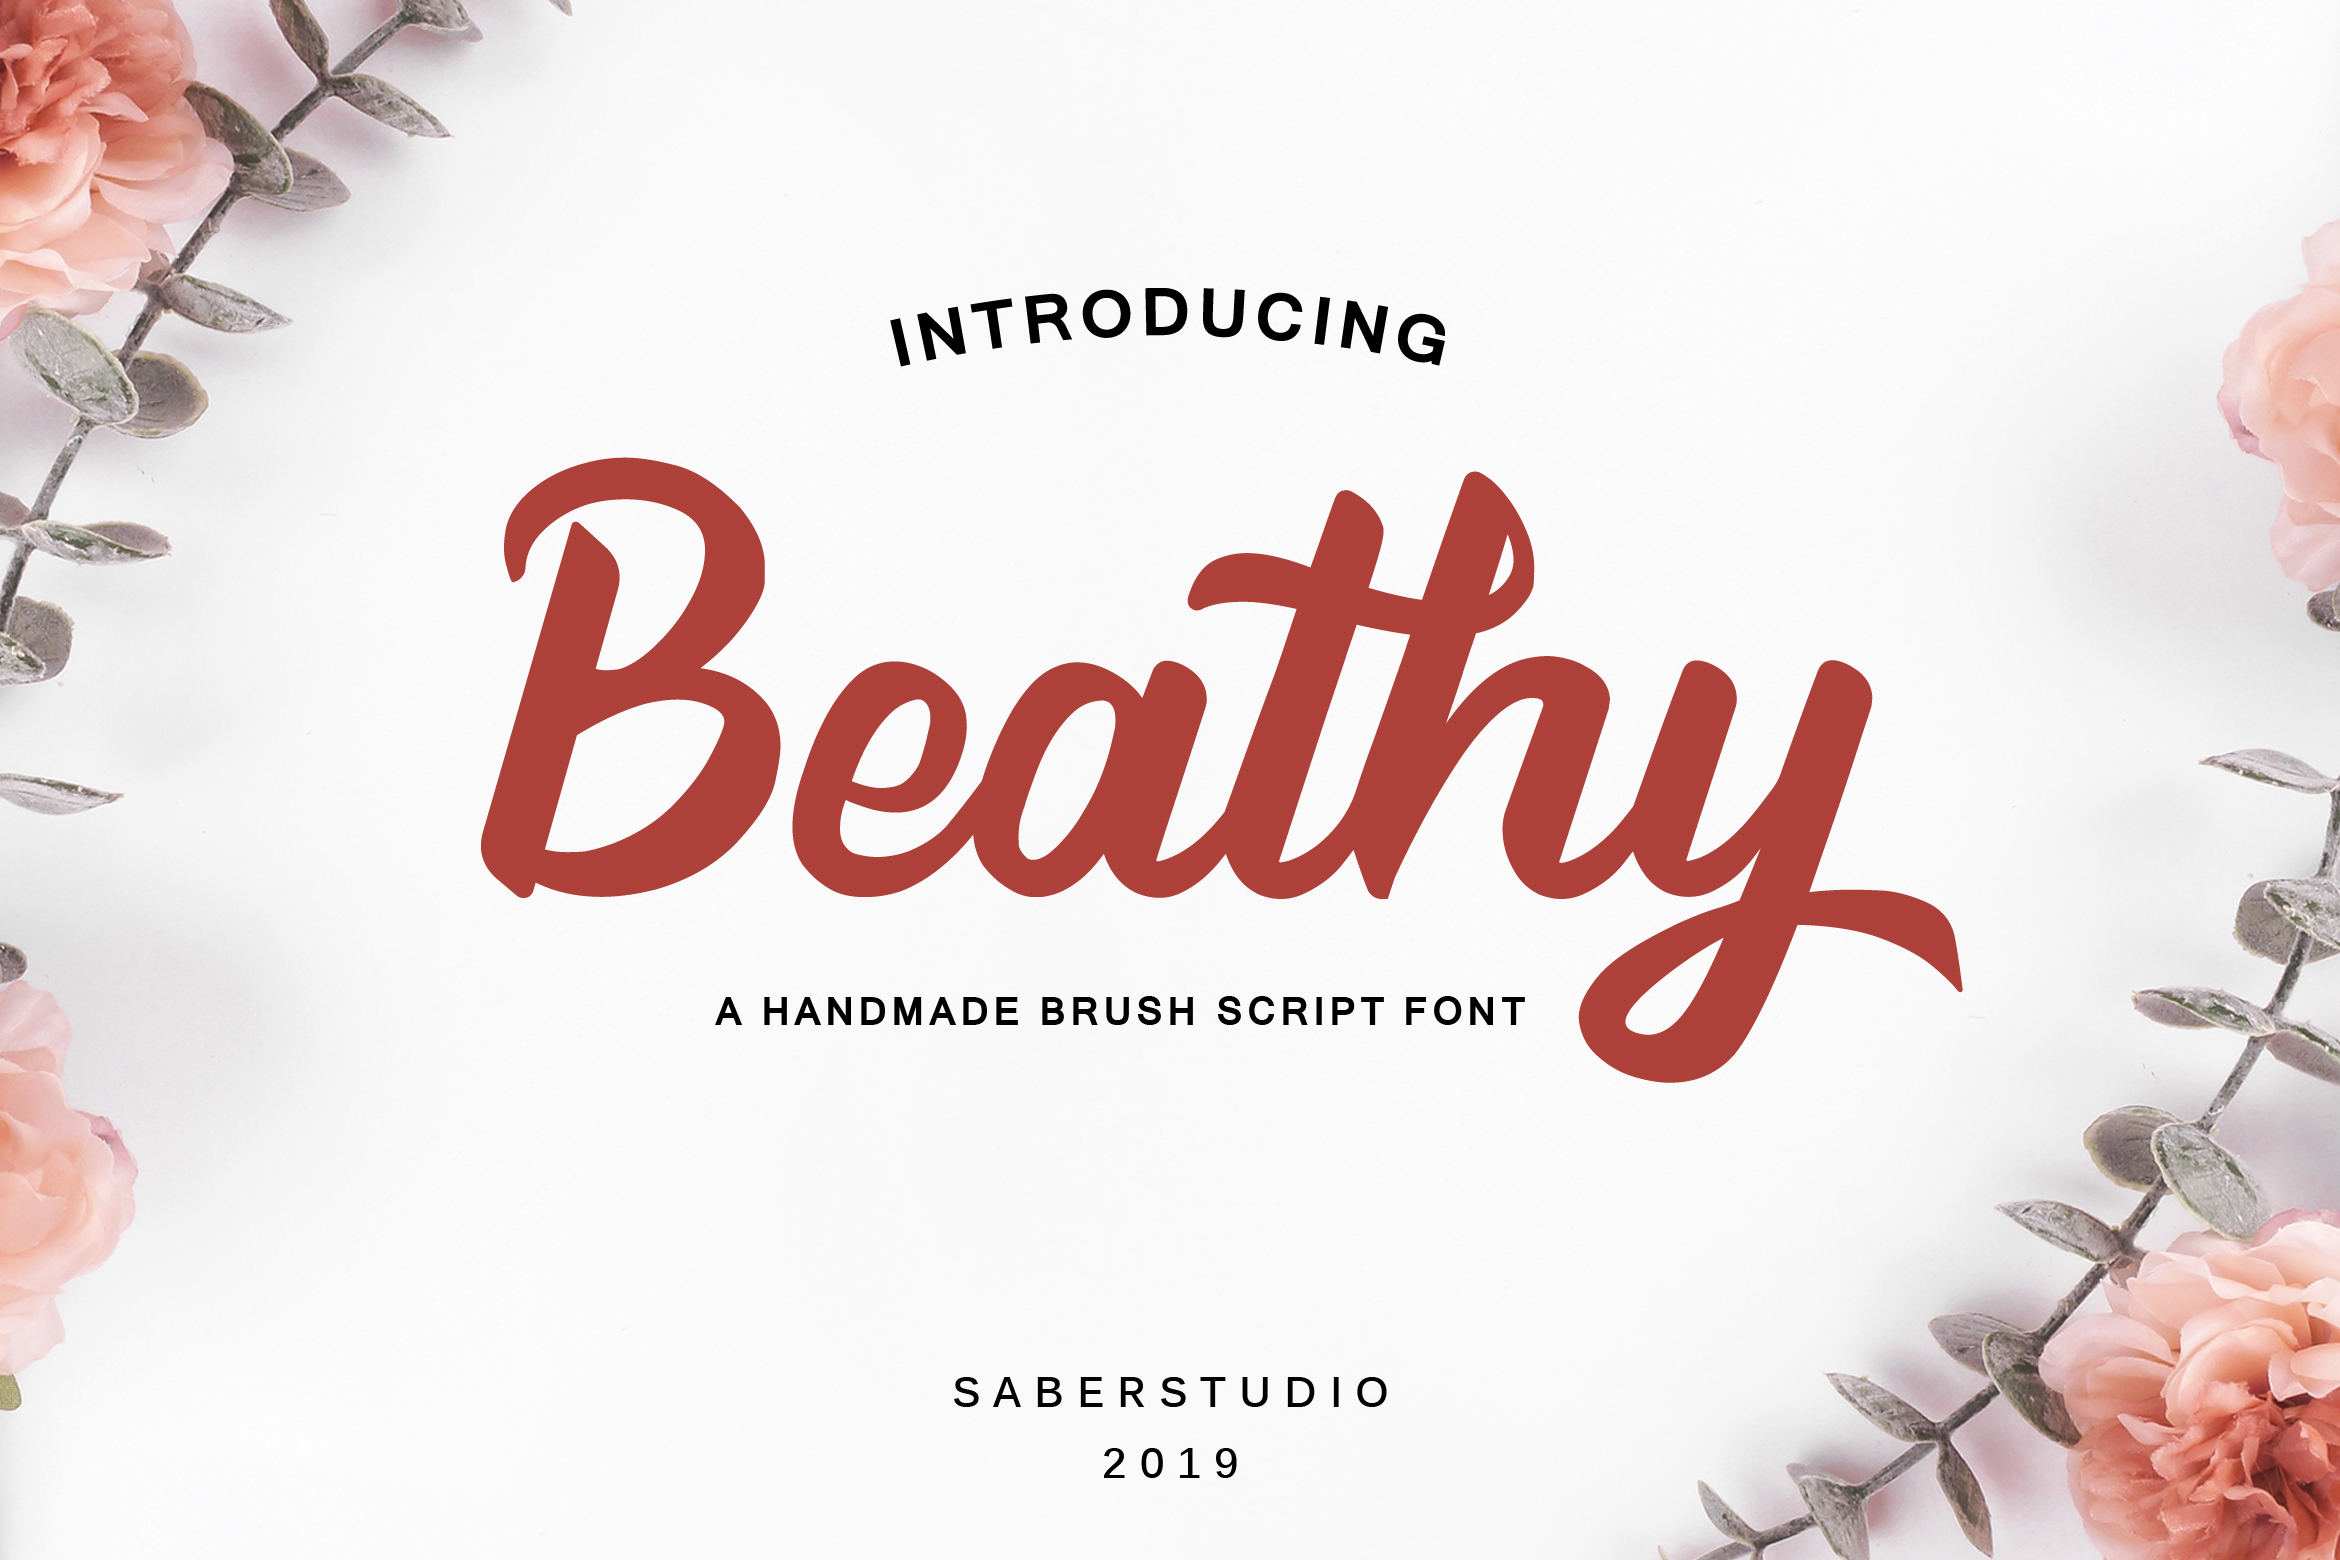 Beathy Demo Version font